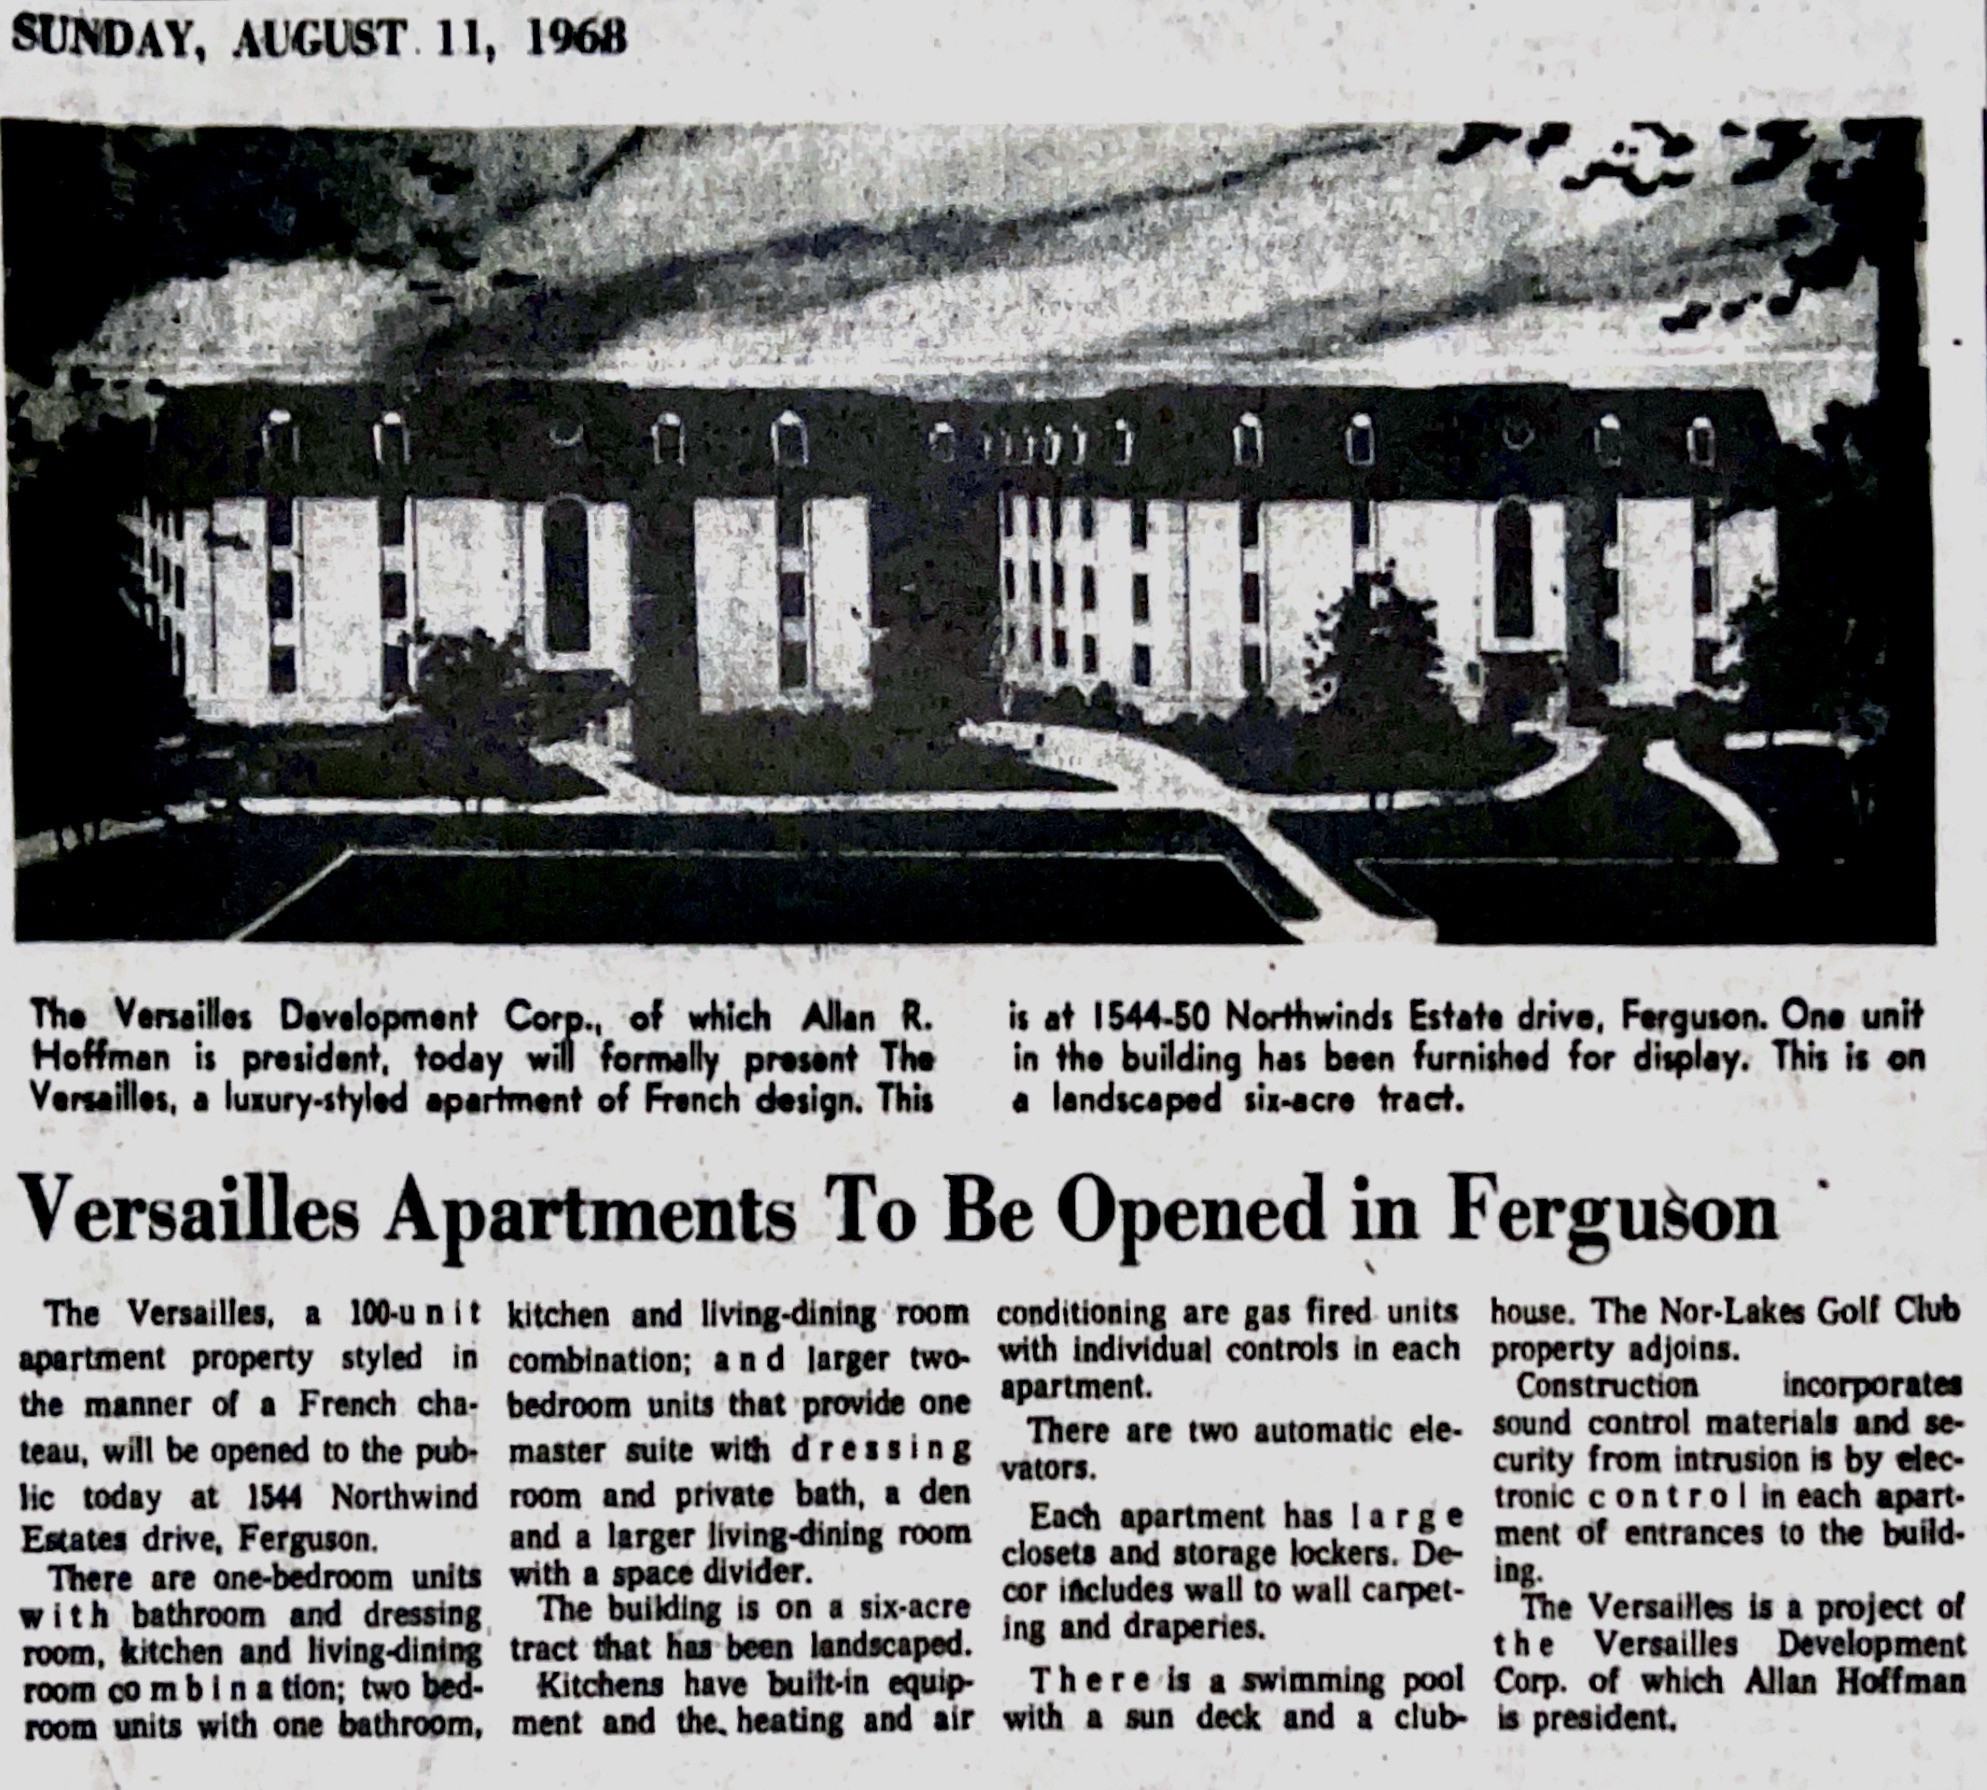 THE VERSAILLES. St. Louis Post-Dispatch, August 11, 1968. 